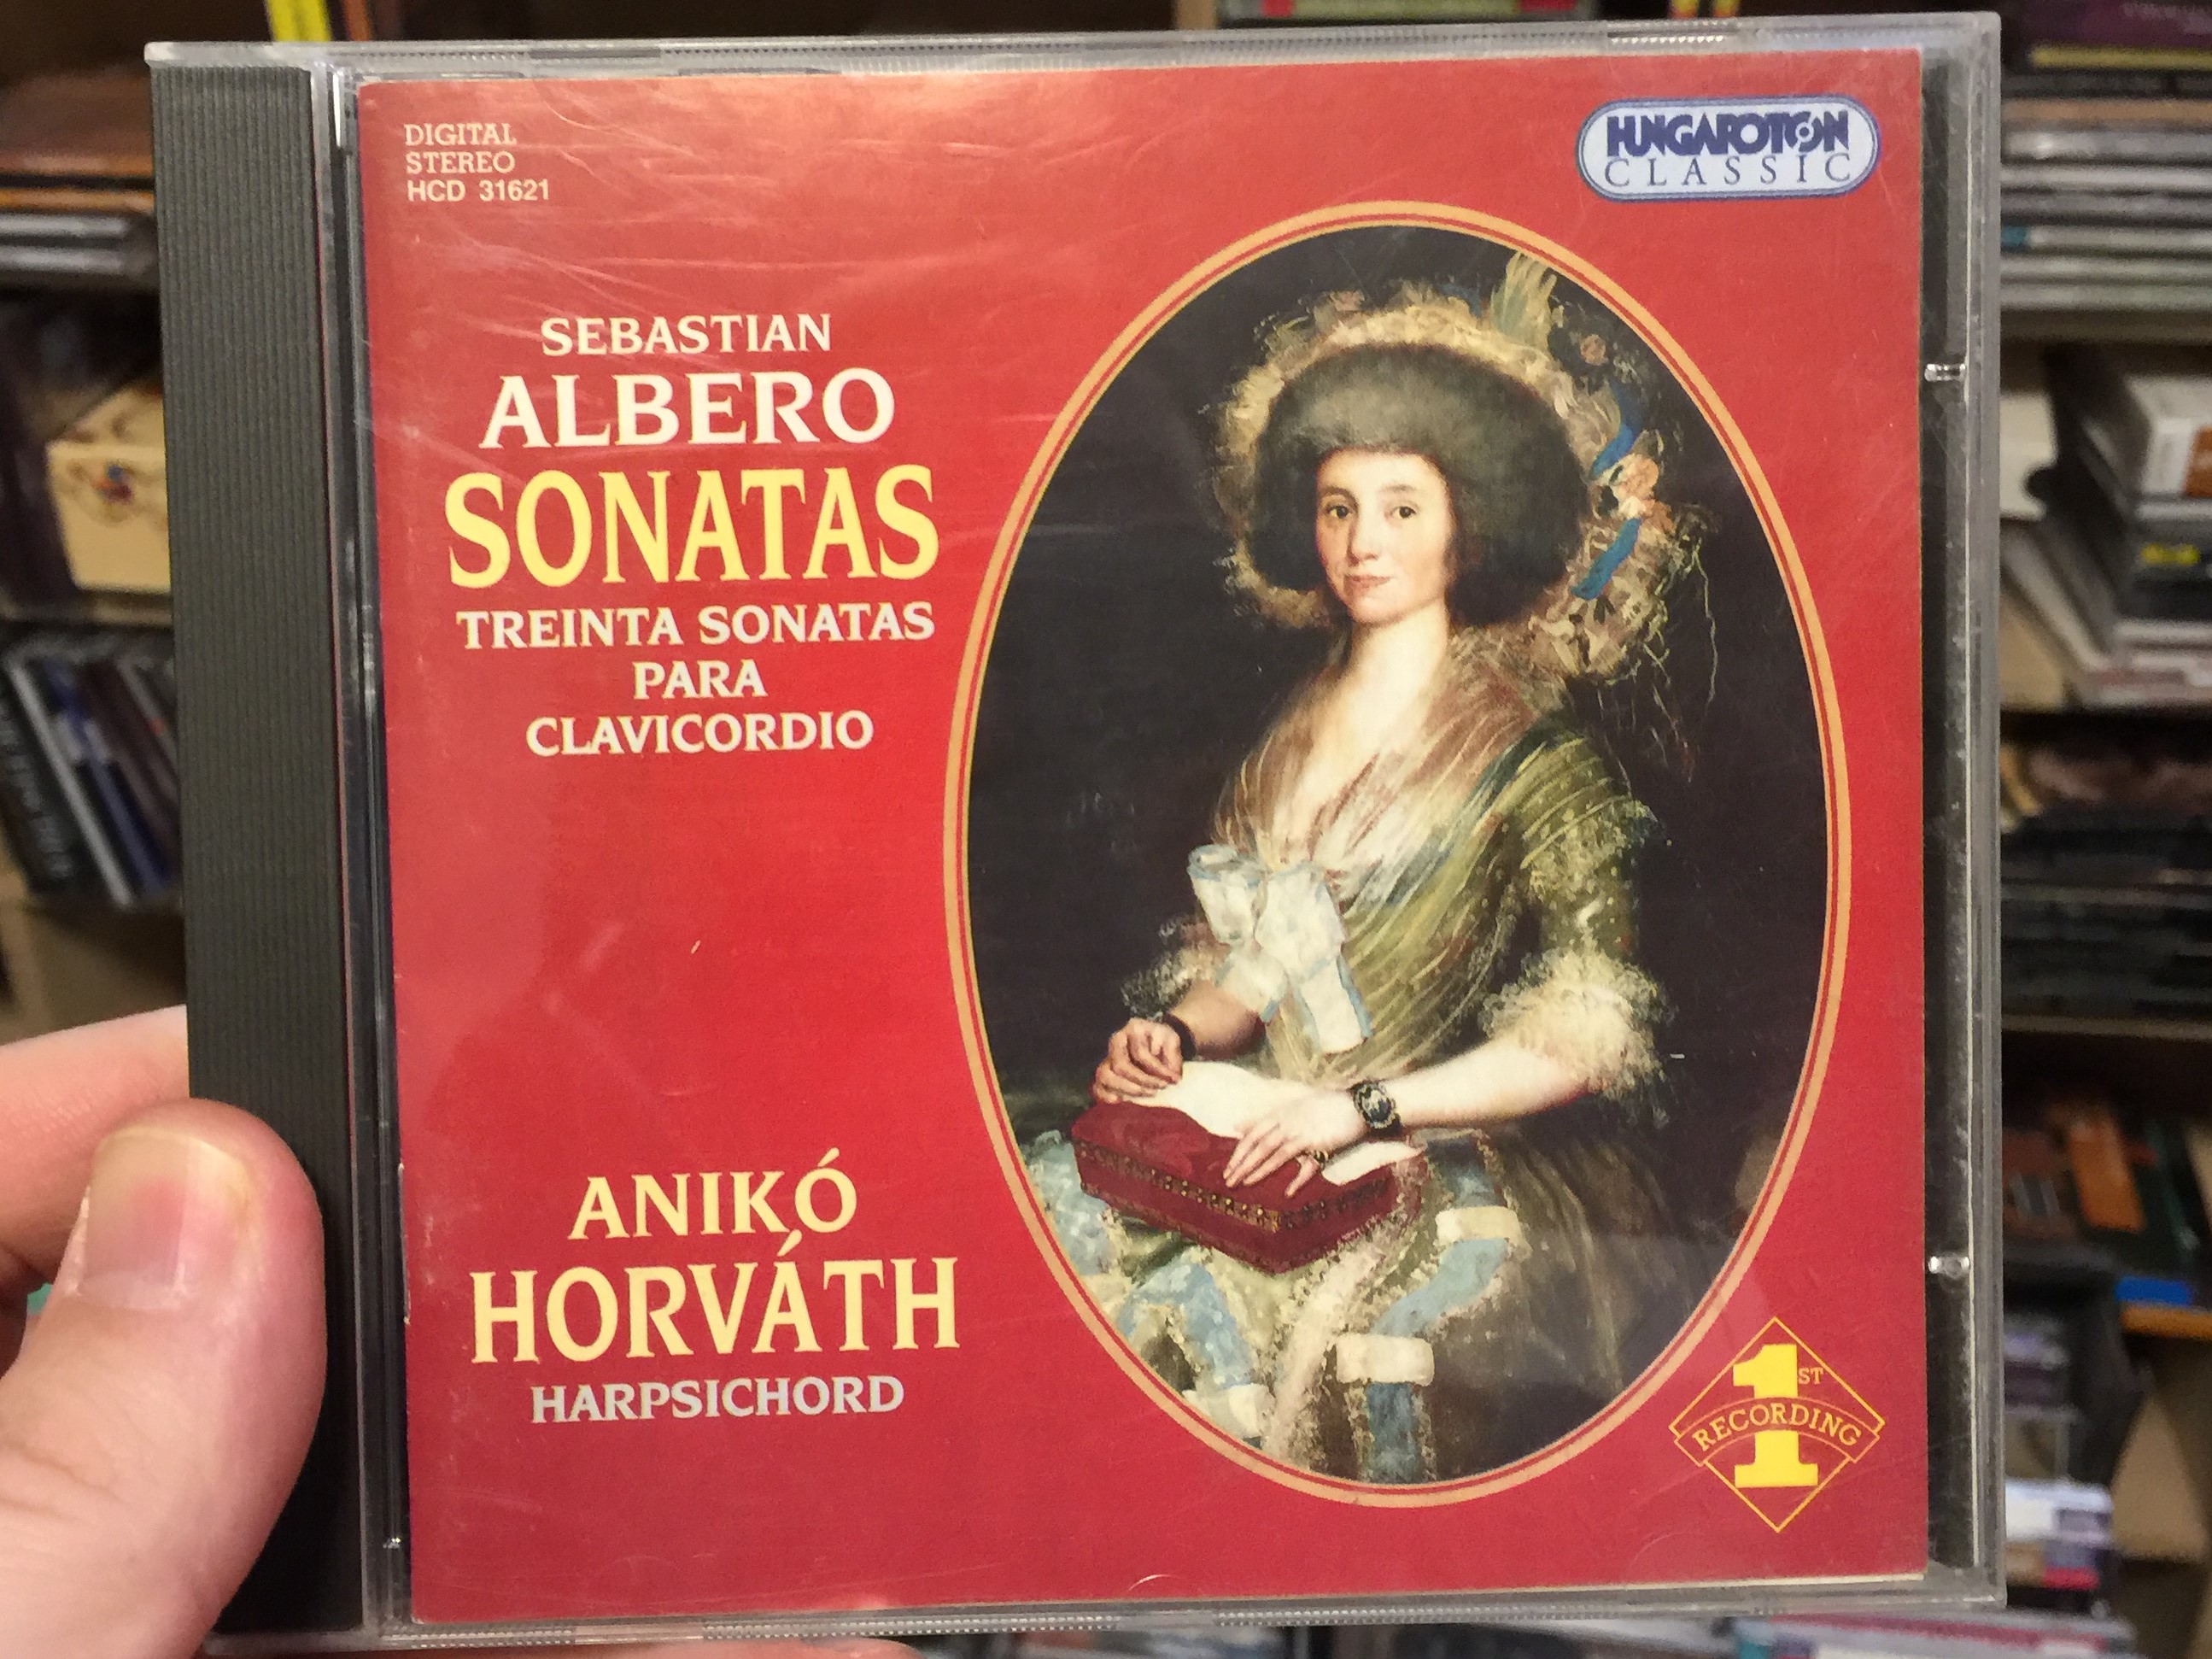 sebastian-alberto-sonatas-treinta-sonatas-para-clavicordio-aniko-horvath-harpsichord-hungaroton-classic-audio-cd-1996-stereo-hcd-31621-1-.jpg